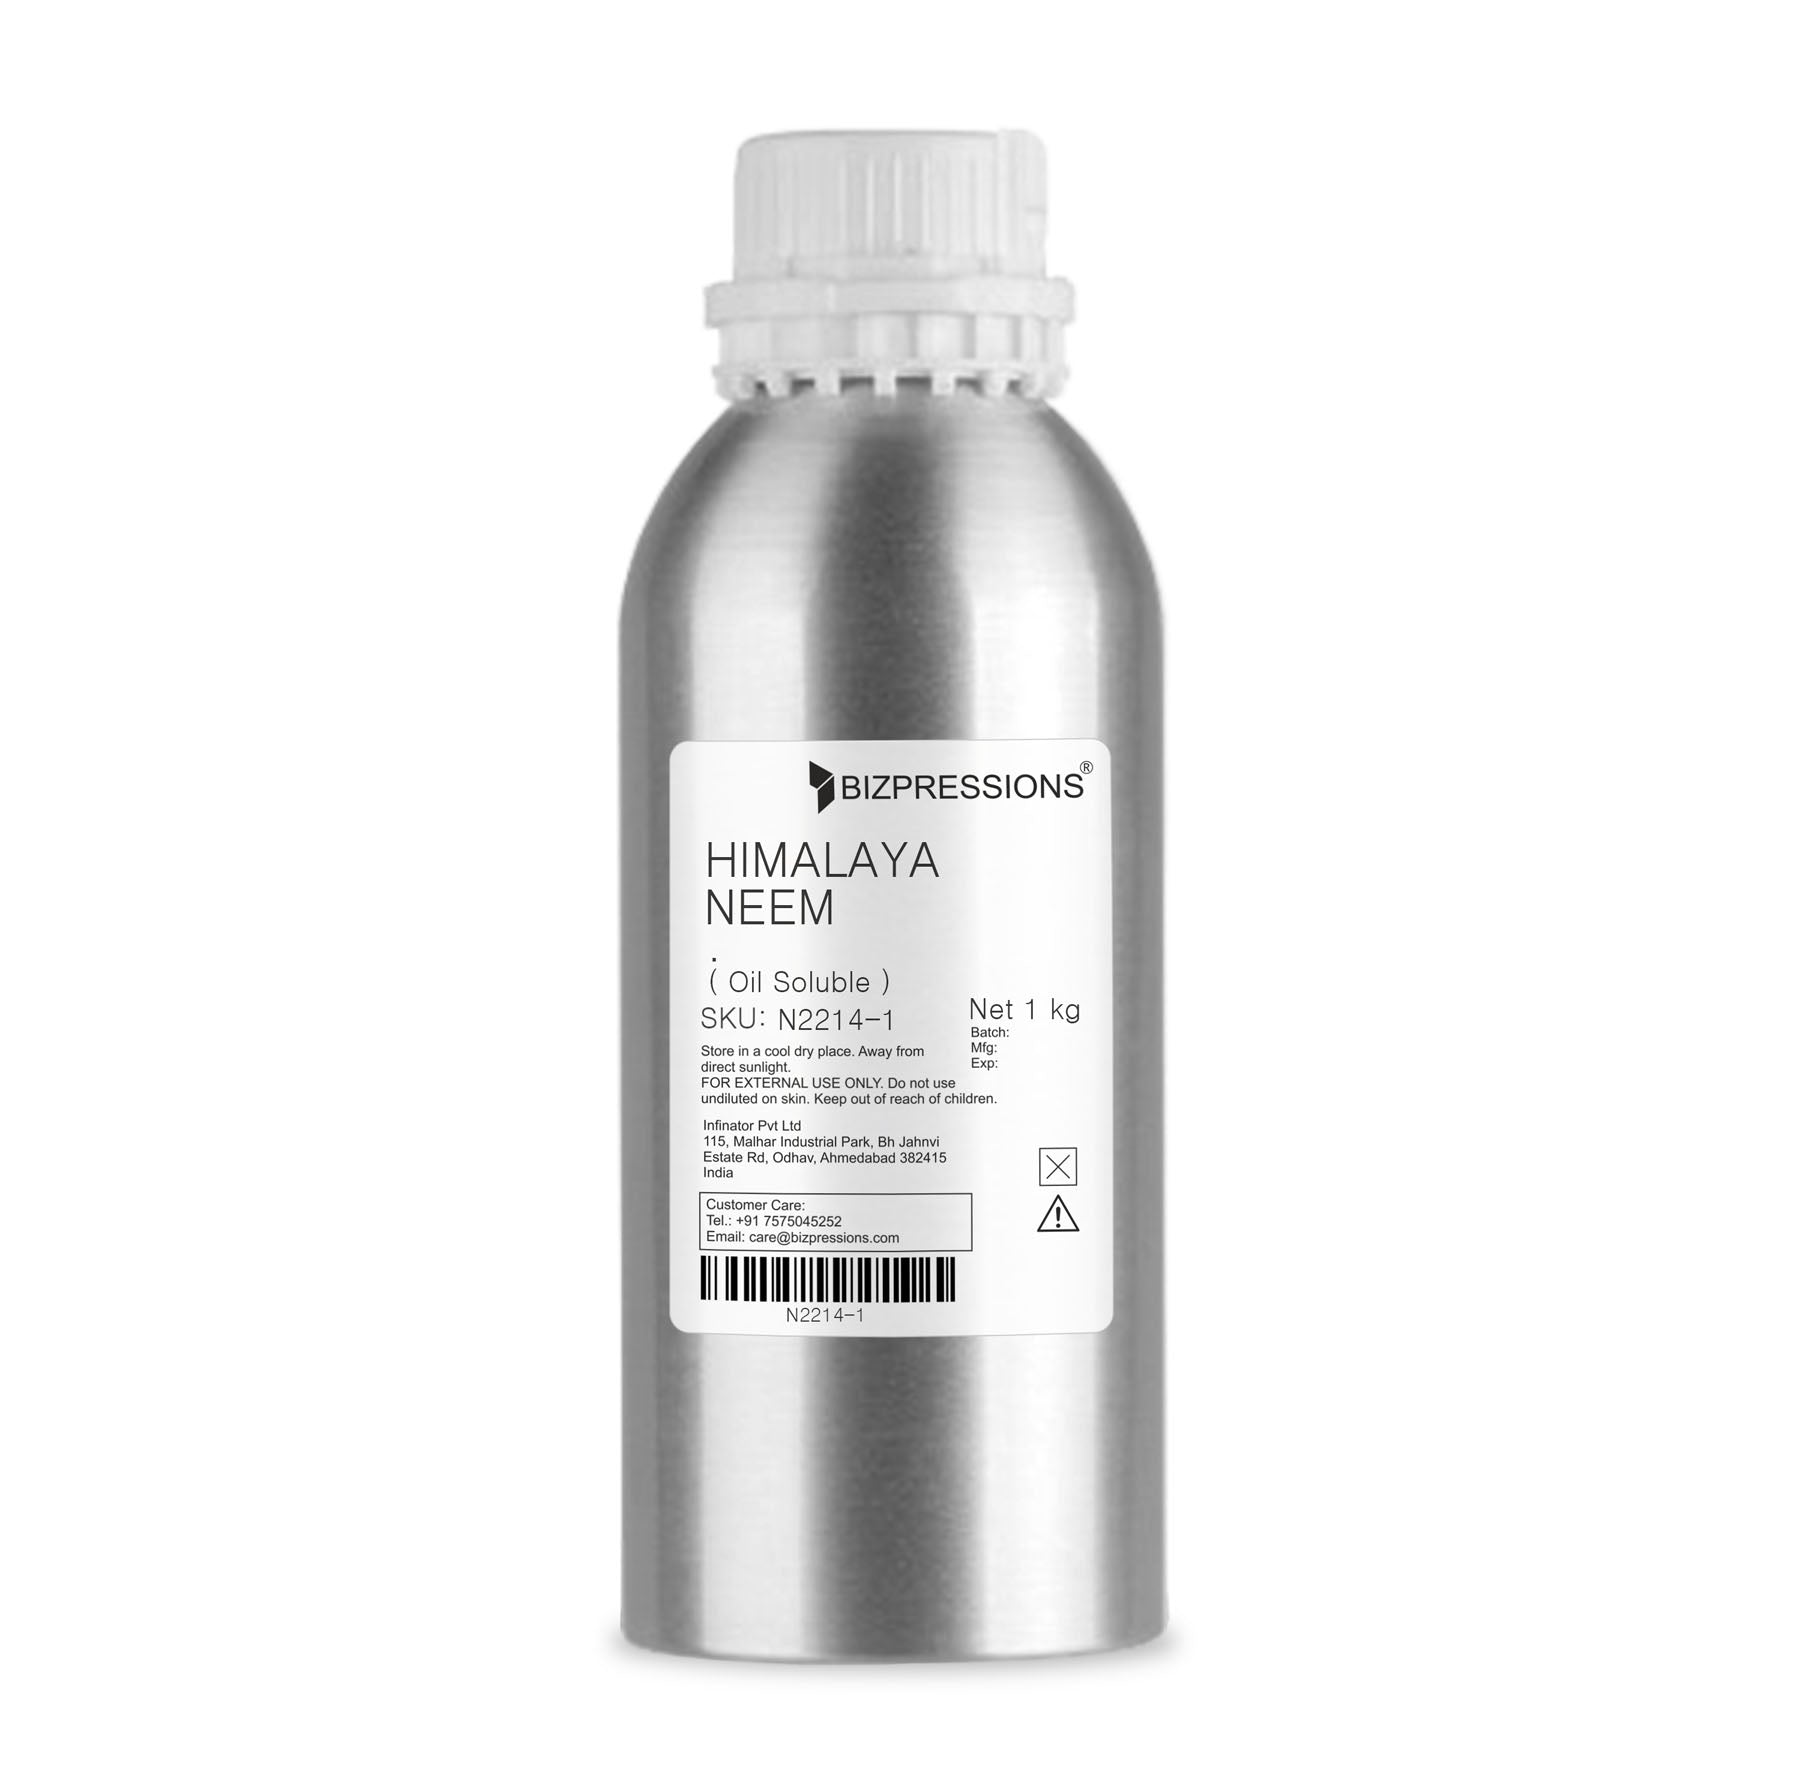 HIMALAYA NEEM - Fragrance ( Oil Soluble ) - 1 kg